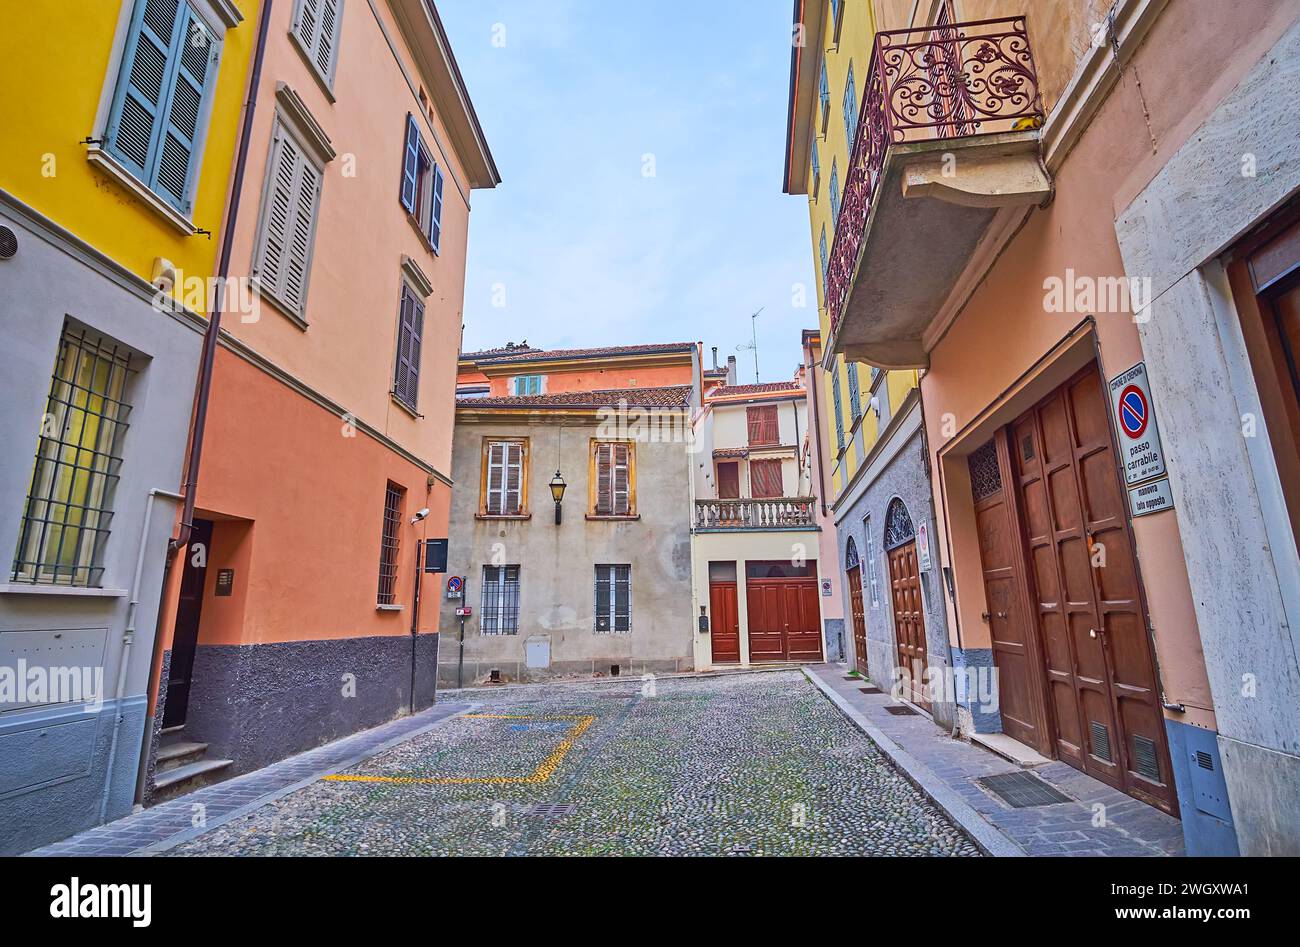 The narrow Vicolo Pertusio street in old town, Cremona, Italy Stock Photo